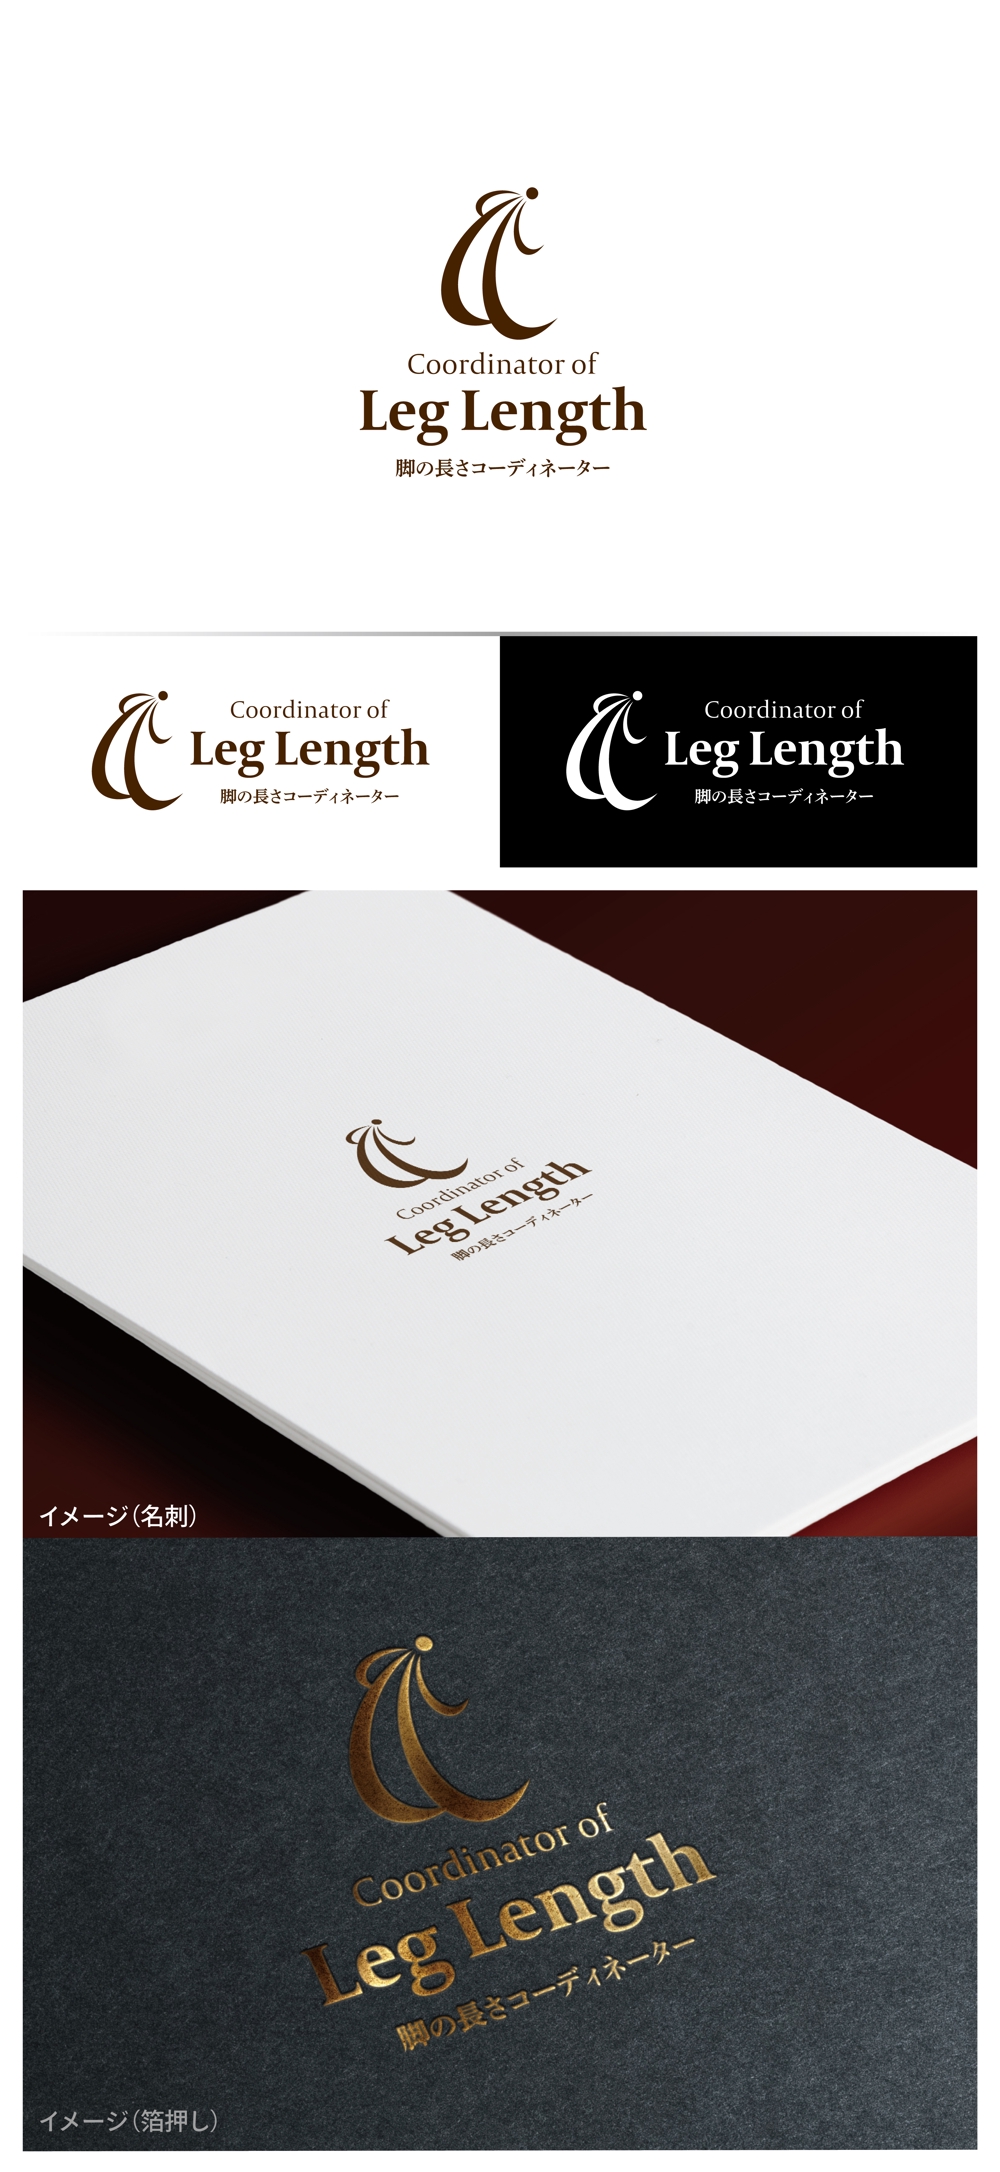 Coordinator of Leg Length_logo02_01.jpg